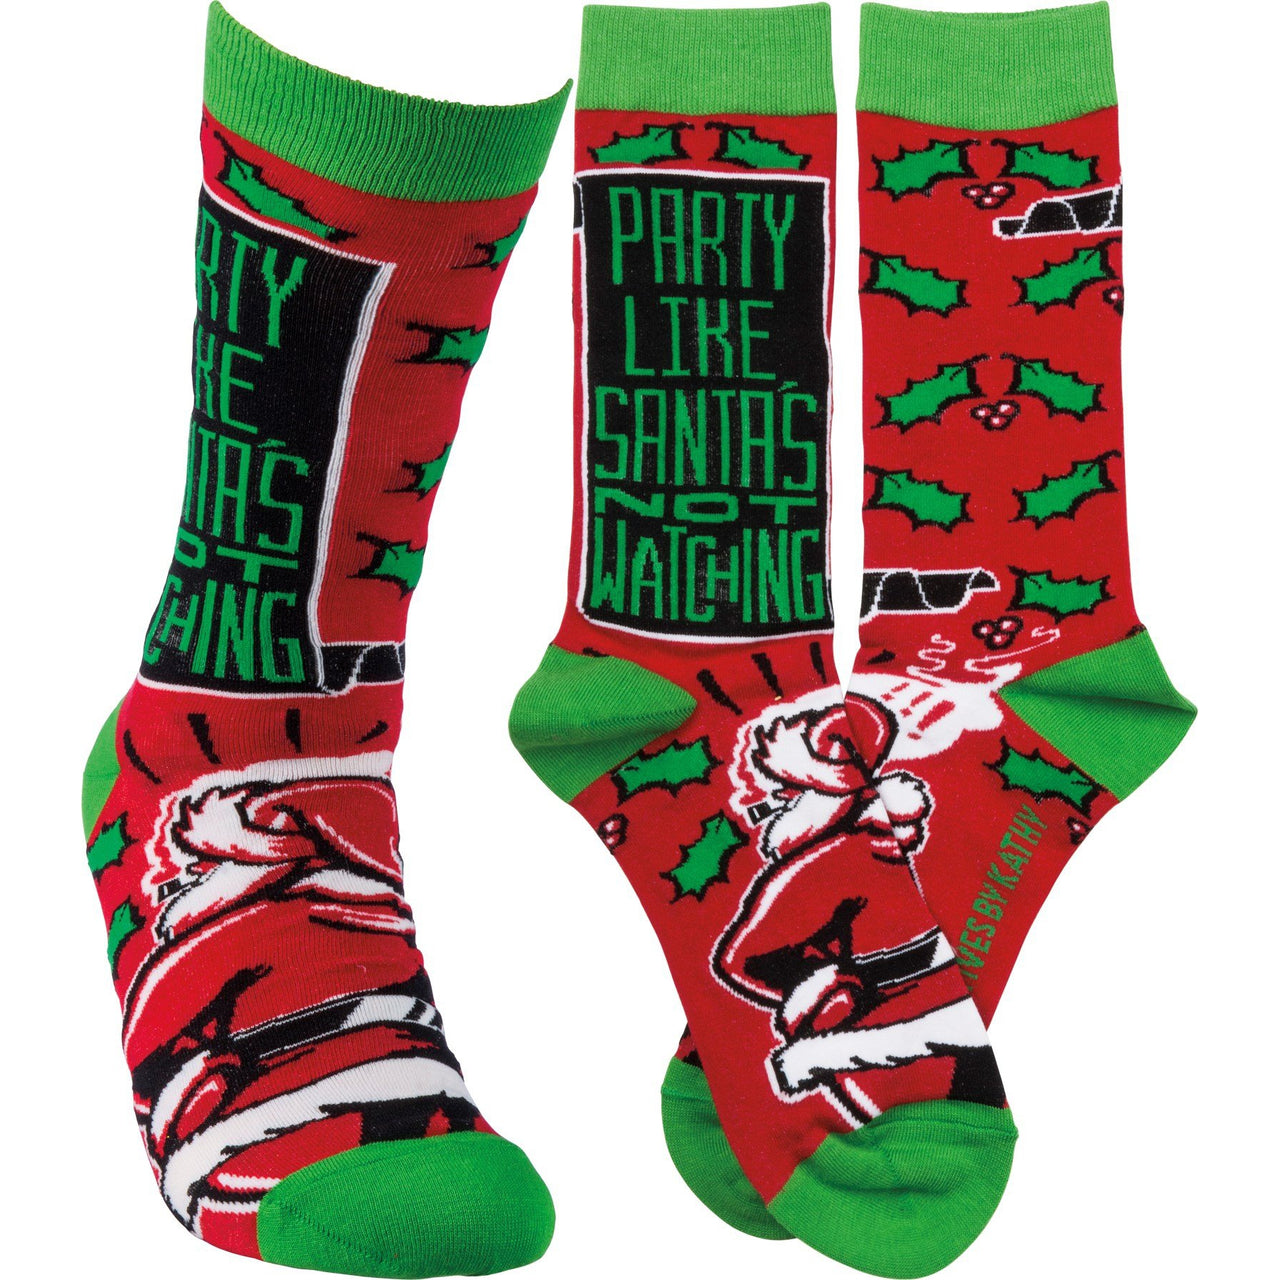 Socks - Party Like Santas Not